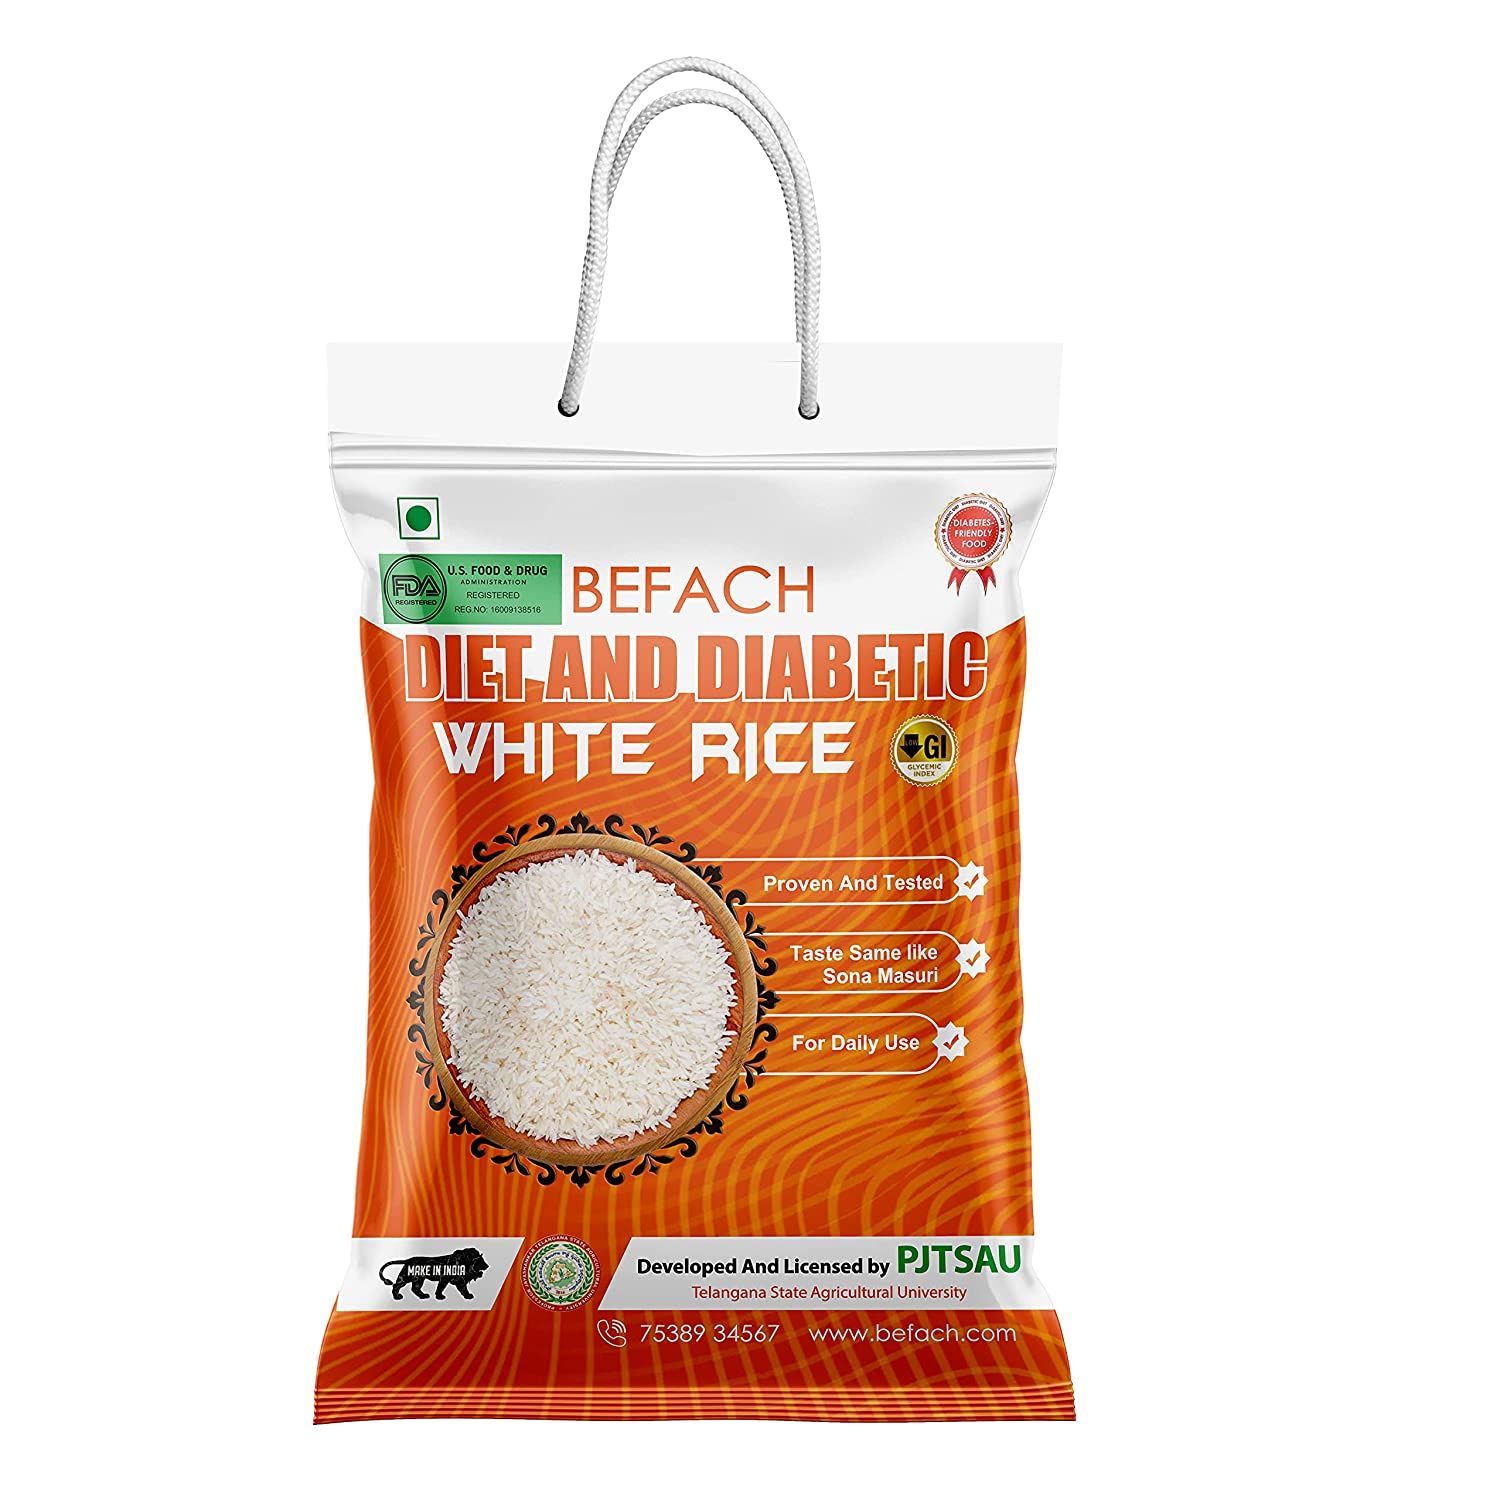 Befach 4X Diabetic White Rice Image